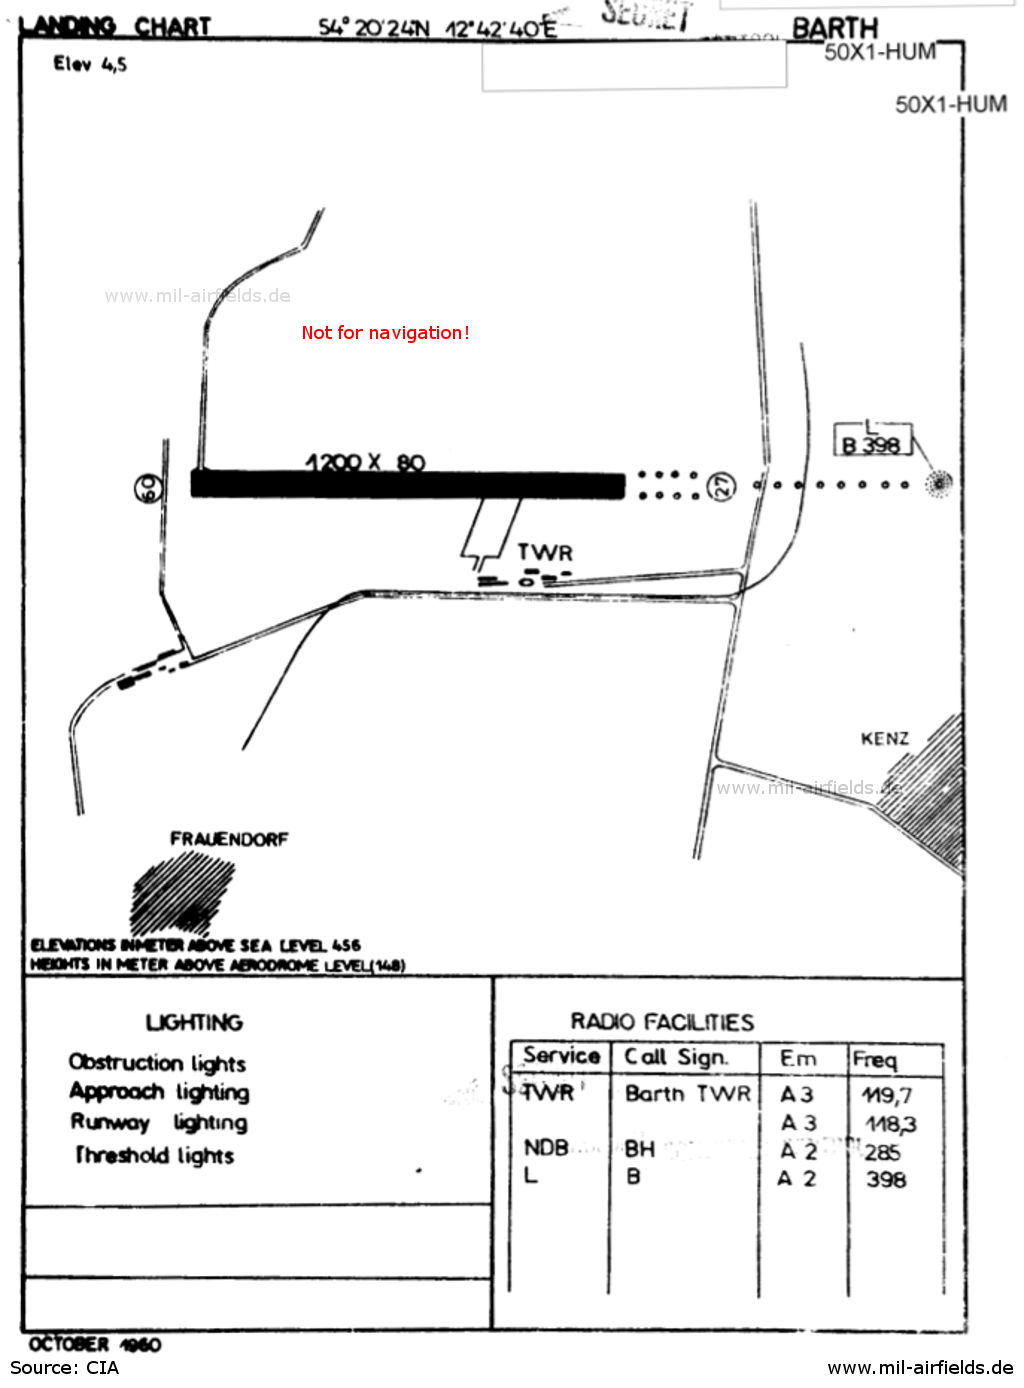 Landing chart, Flughafen Barth, 1960